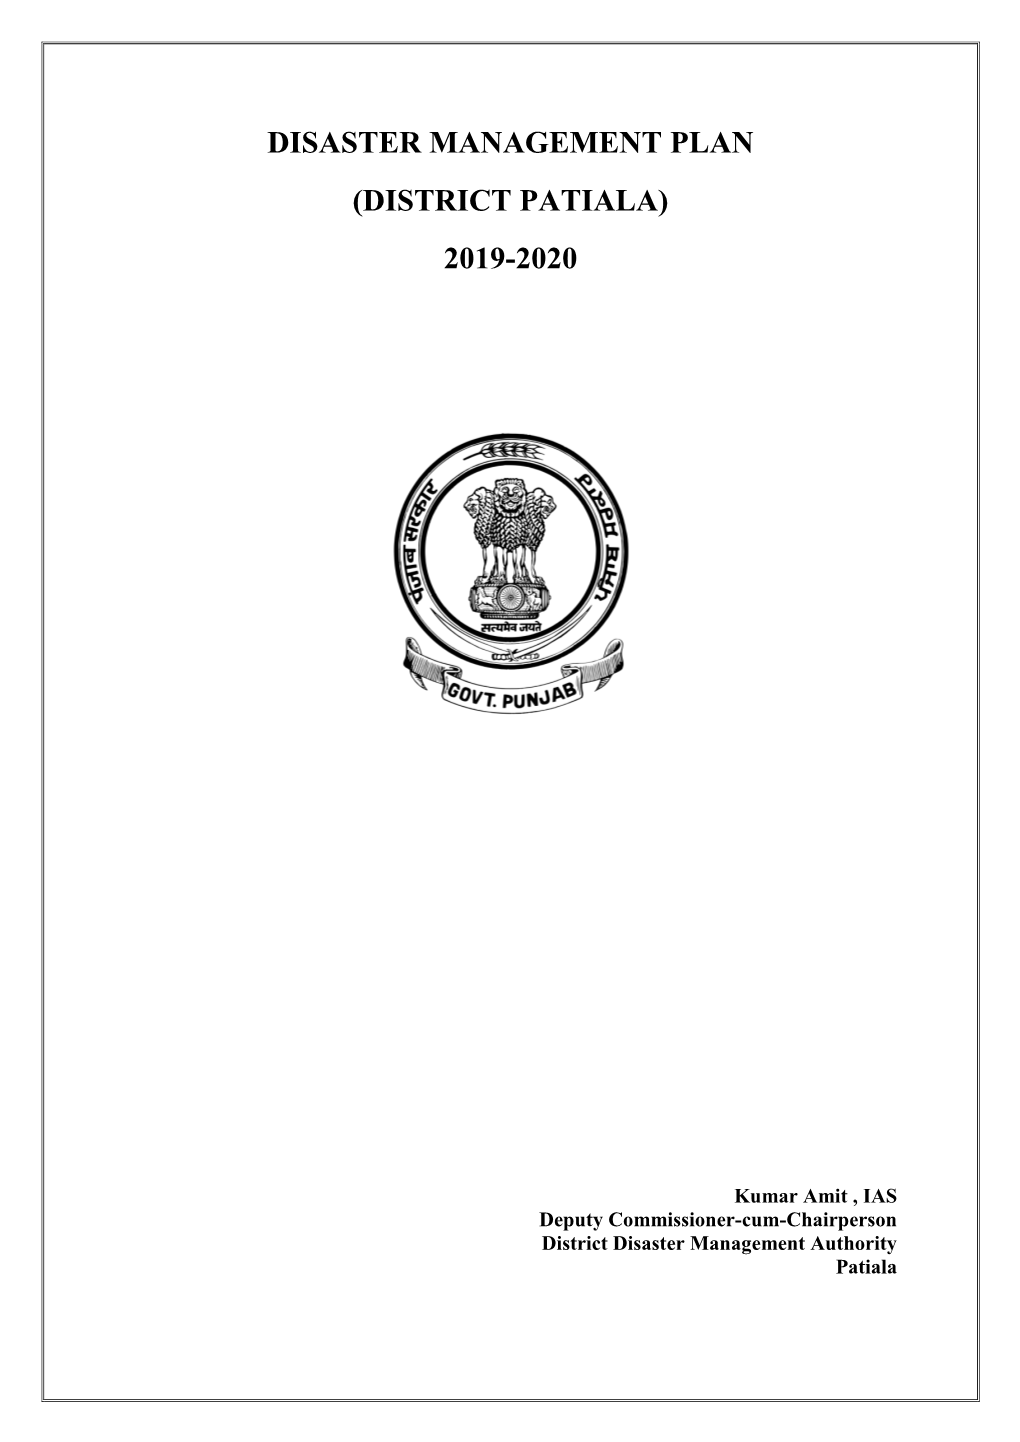 Disaster Management Plan (District Patiala) 2019-2020